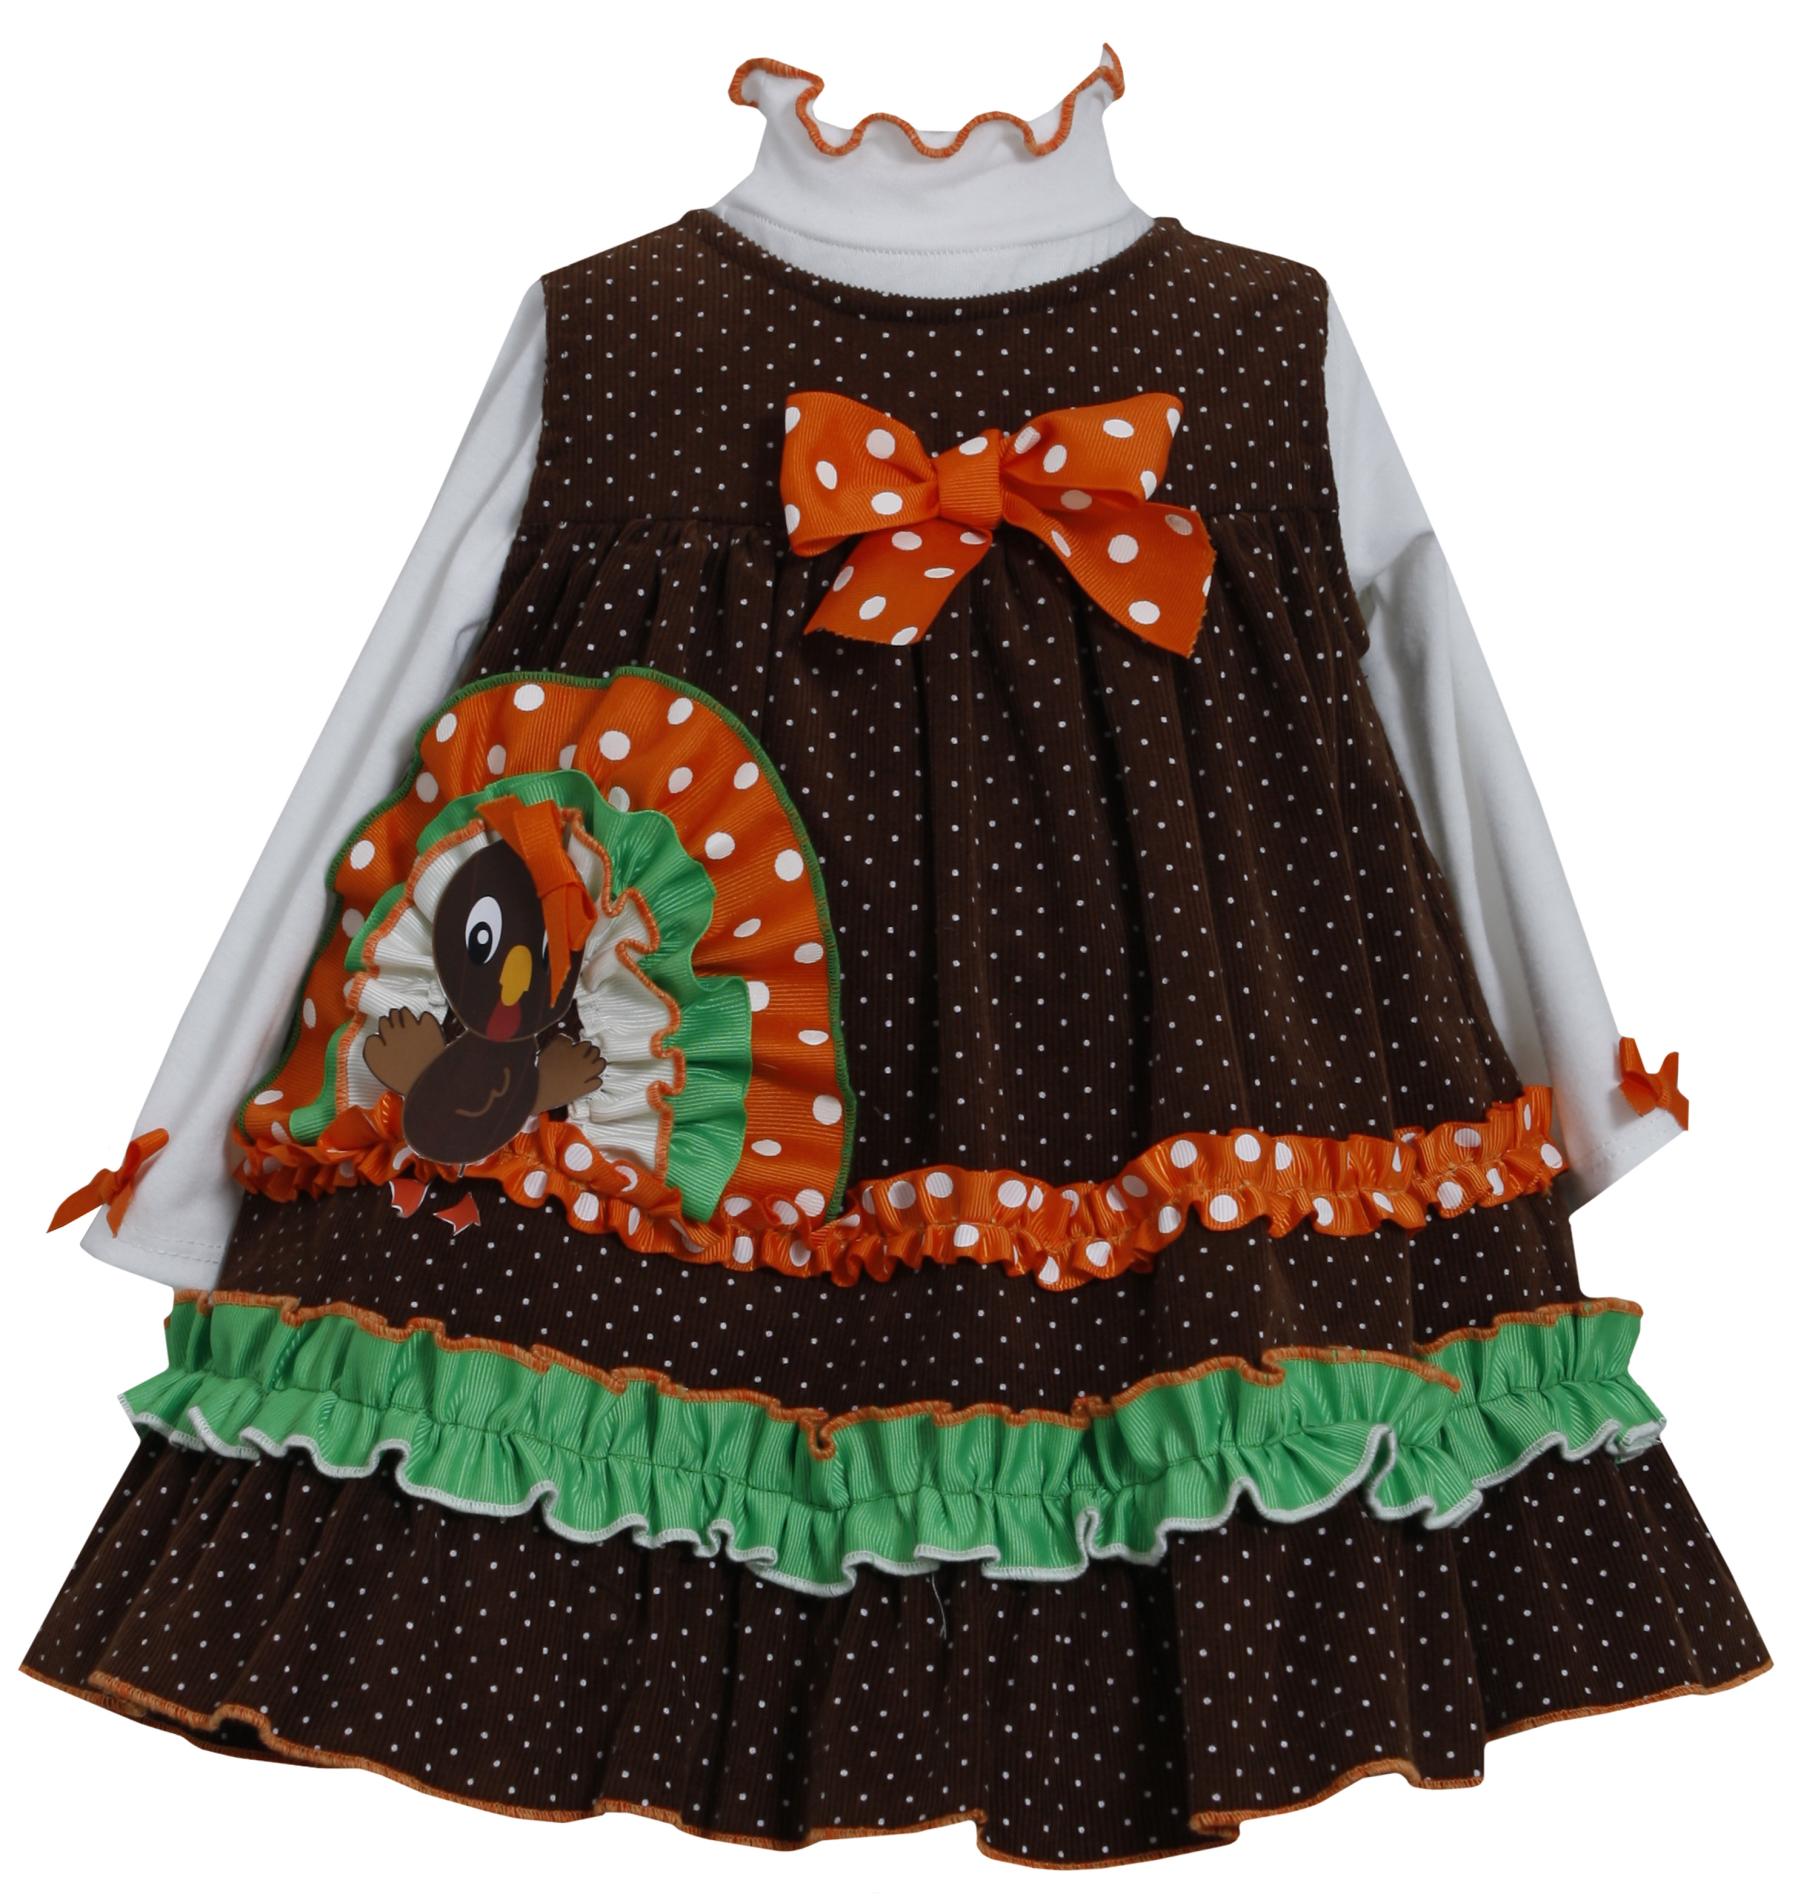 Ashley Ann Infant & Toddler Girl's Thanksgiving Party Dress - Turkey